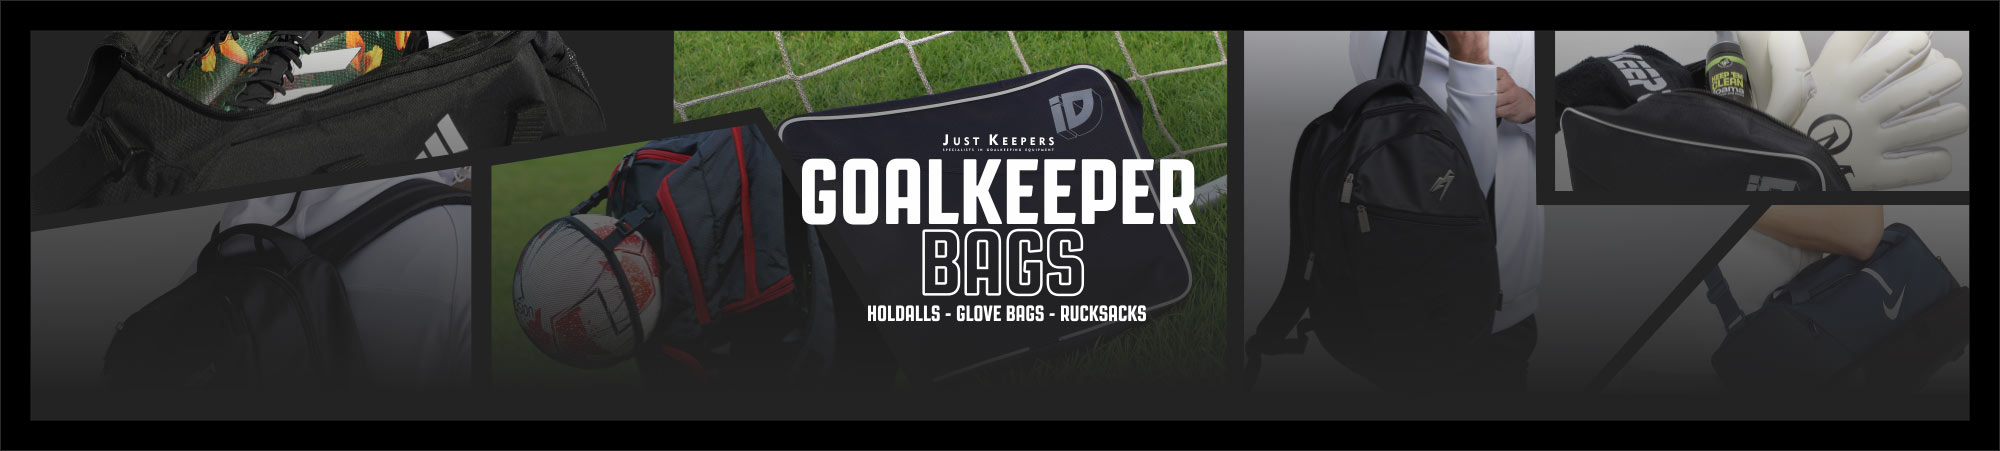 Goalkeeper Glove Bags Football Holdalls Kit Bags